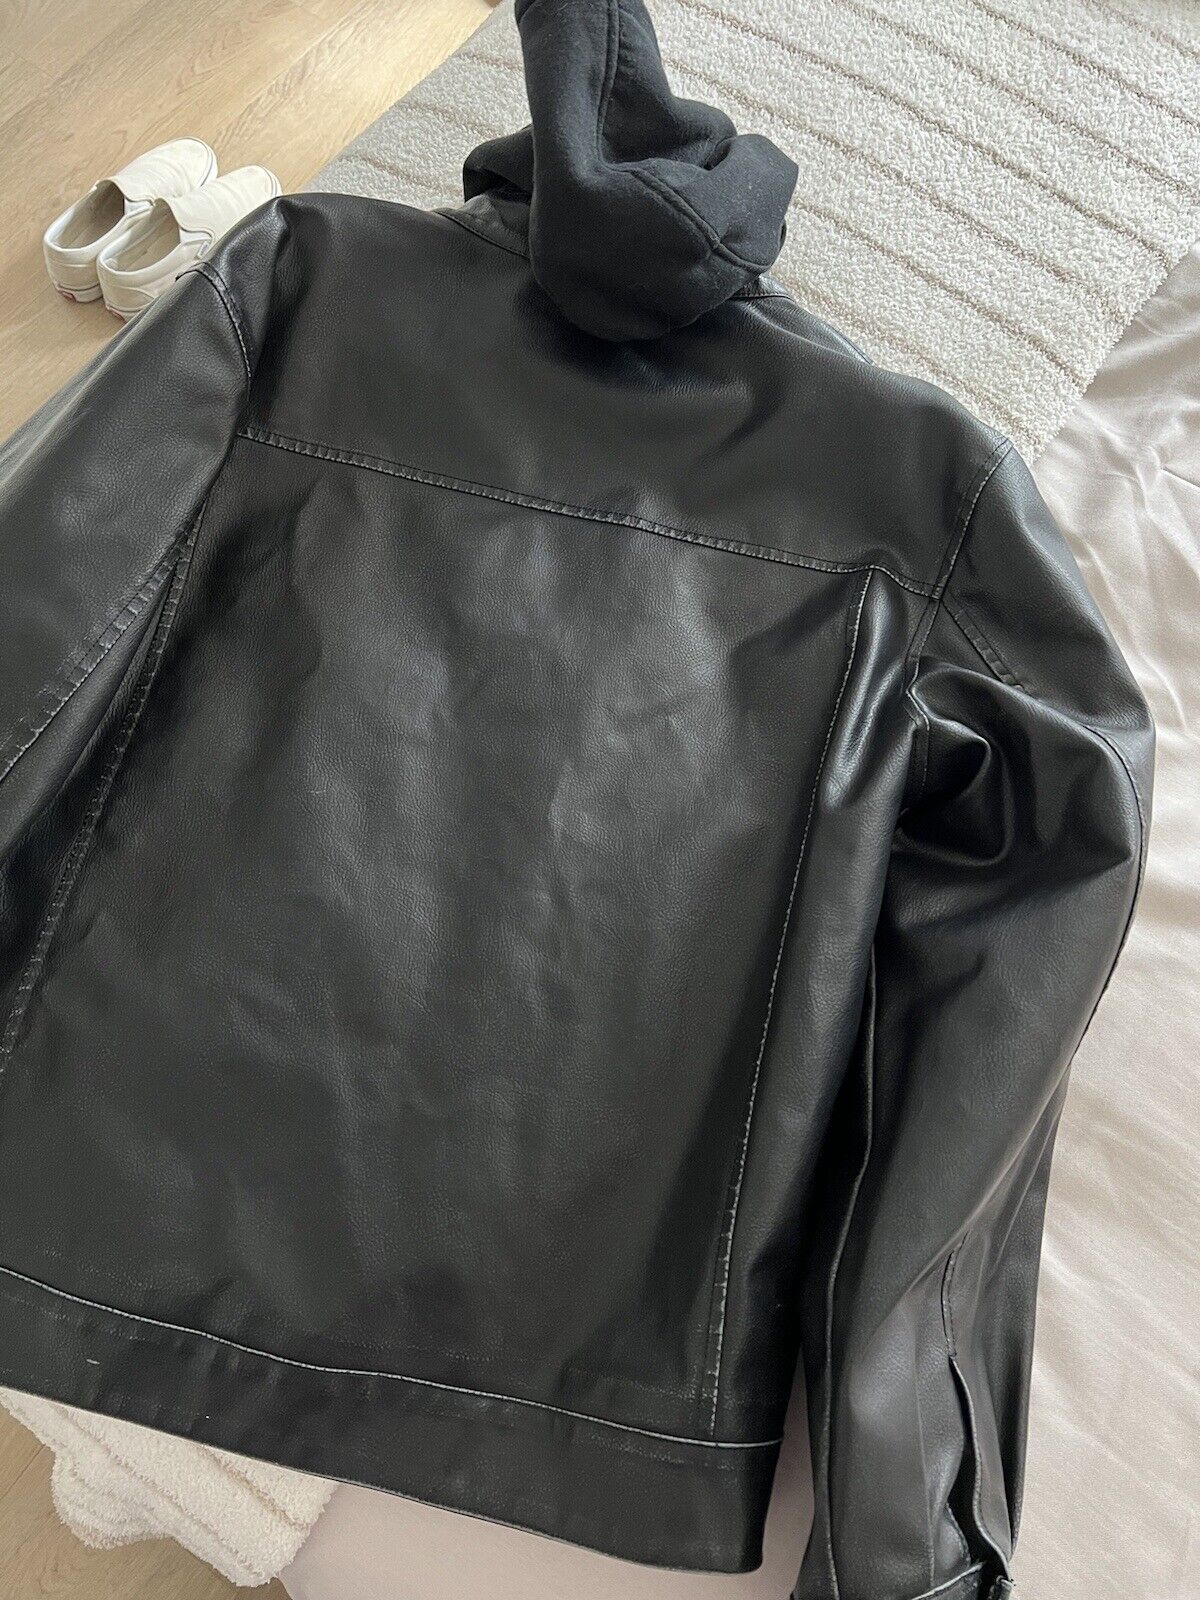 leather jacket vintage - image 3